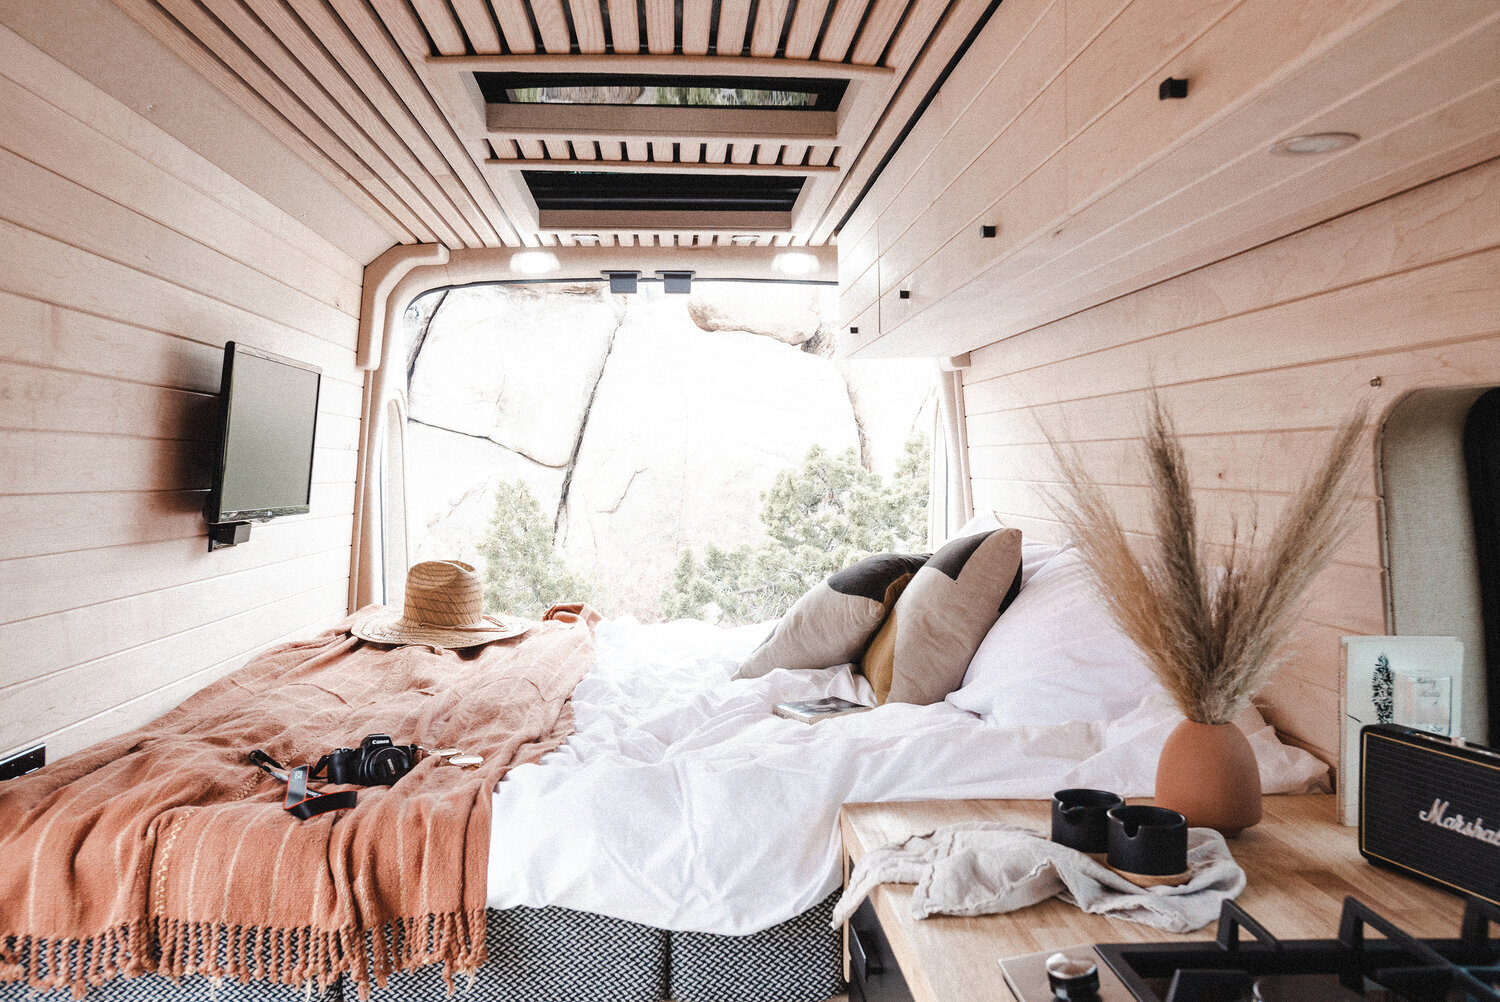 s-california-classic-18-ford-transit-campervan-camper-cartel-internal-vanlife.jpg